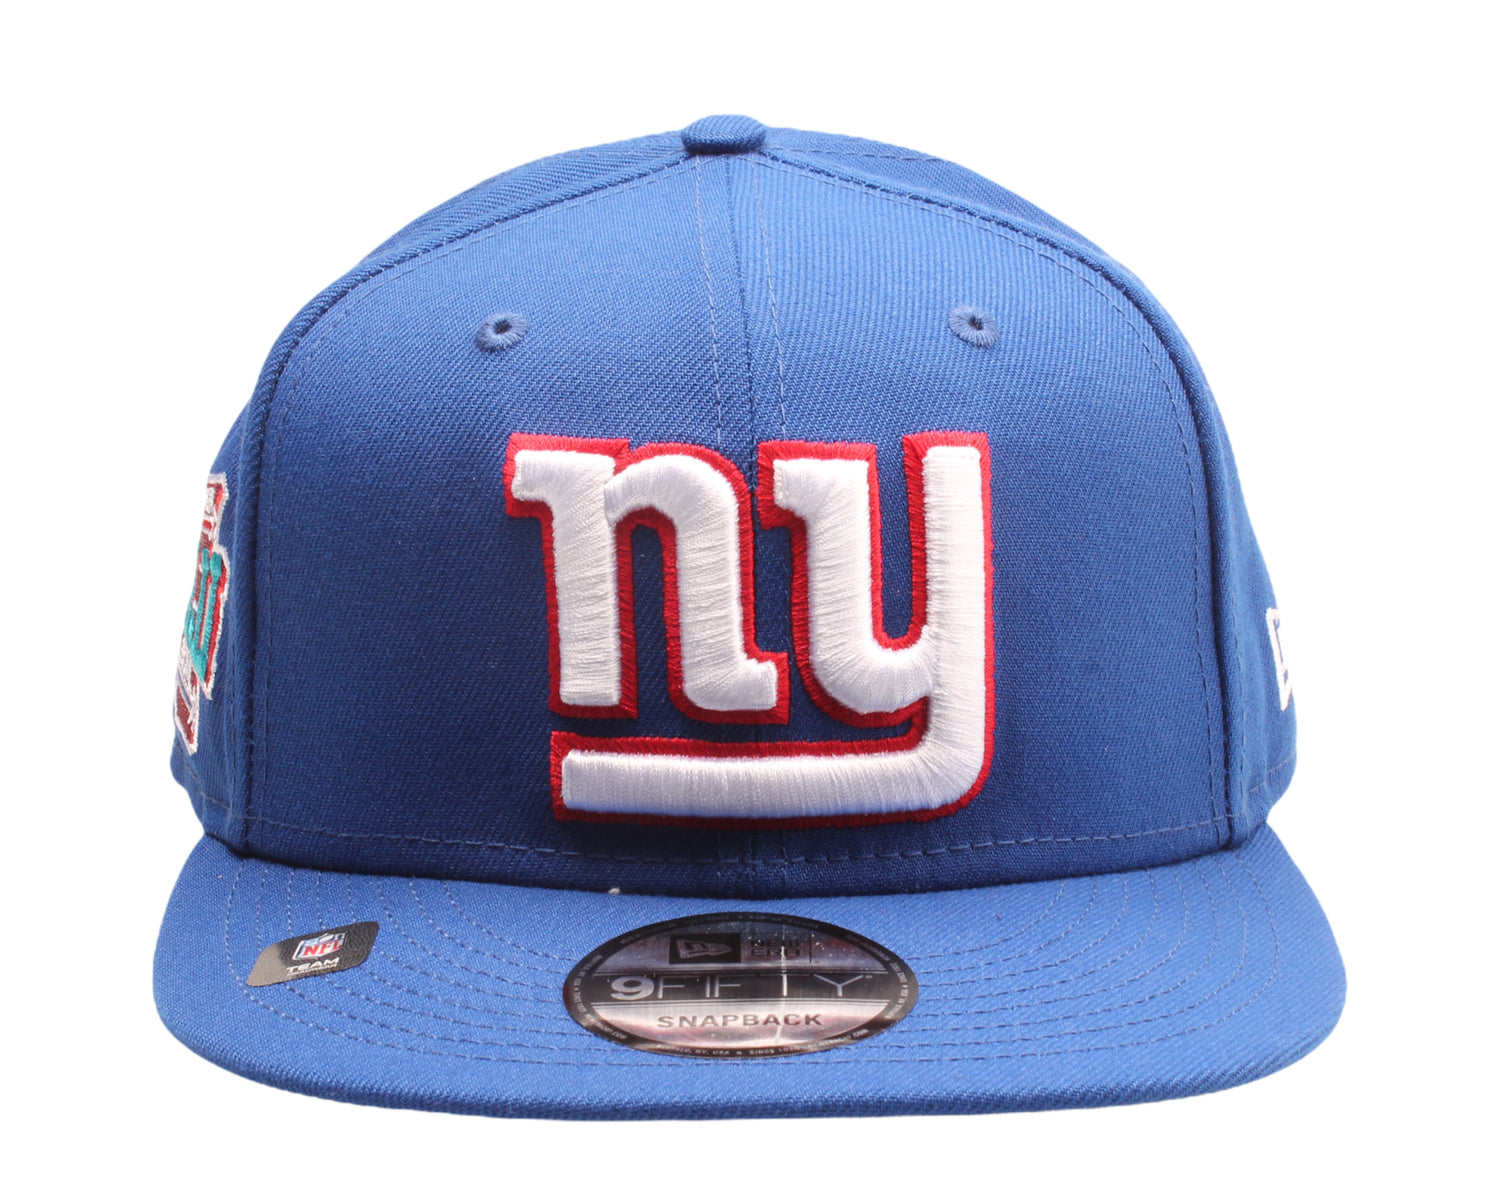 New Era 9Fifty NFL New York Giants XLII Super Bowl Patch Up Snapback Hat